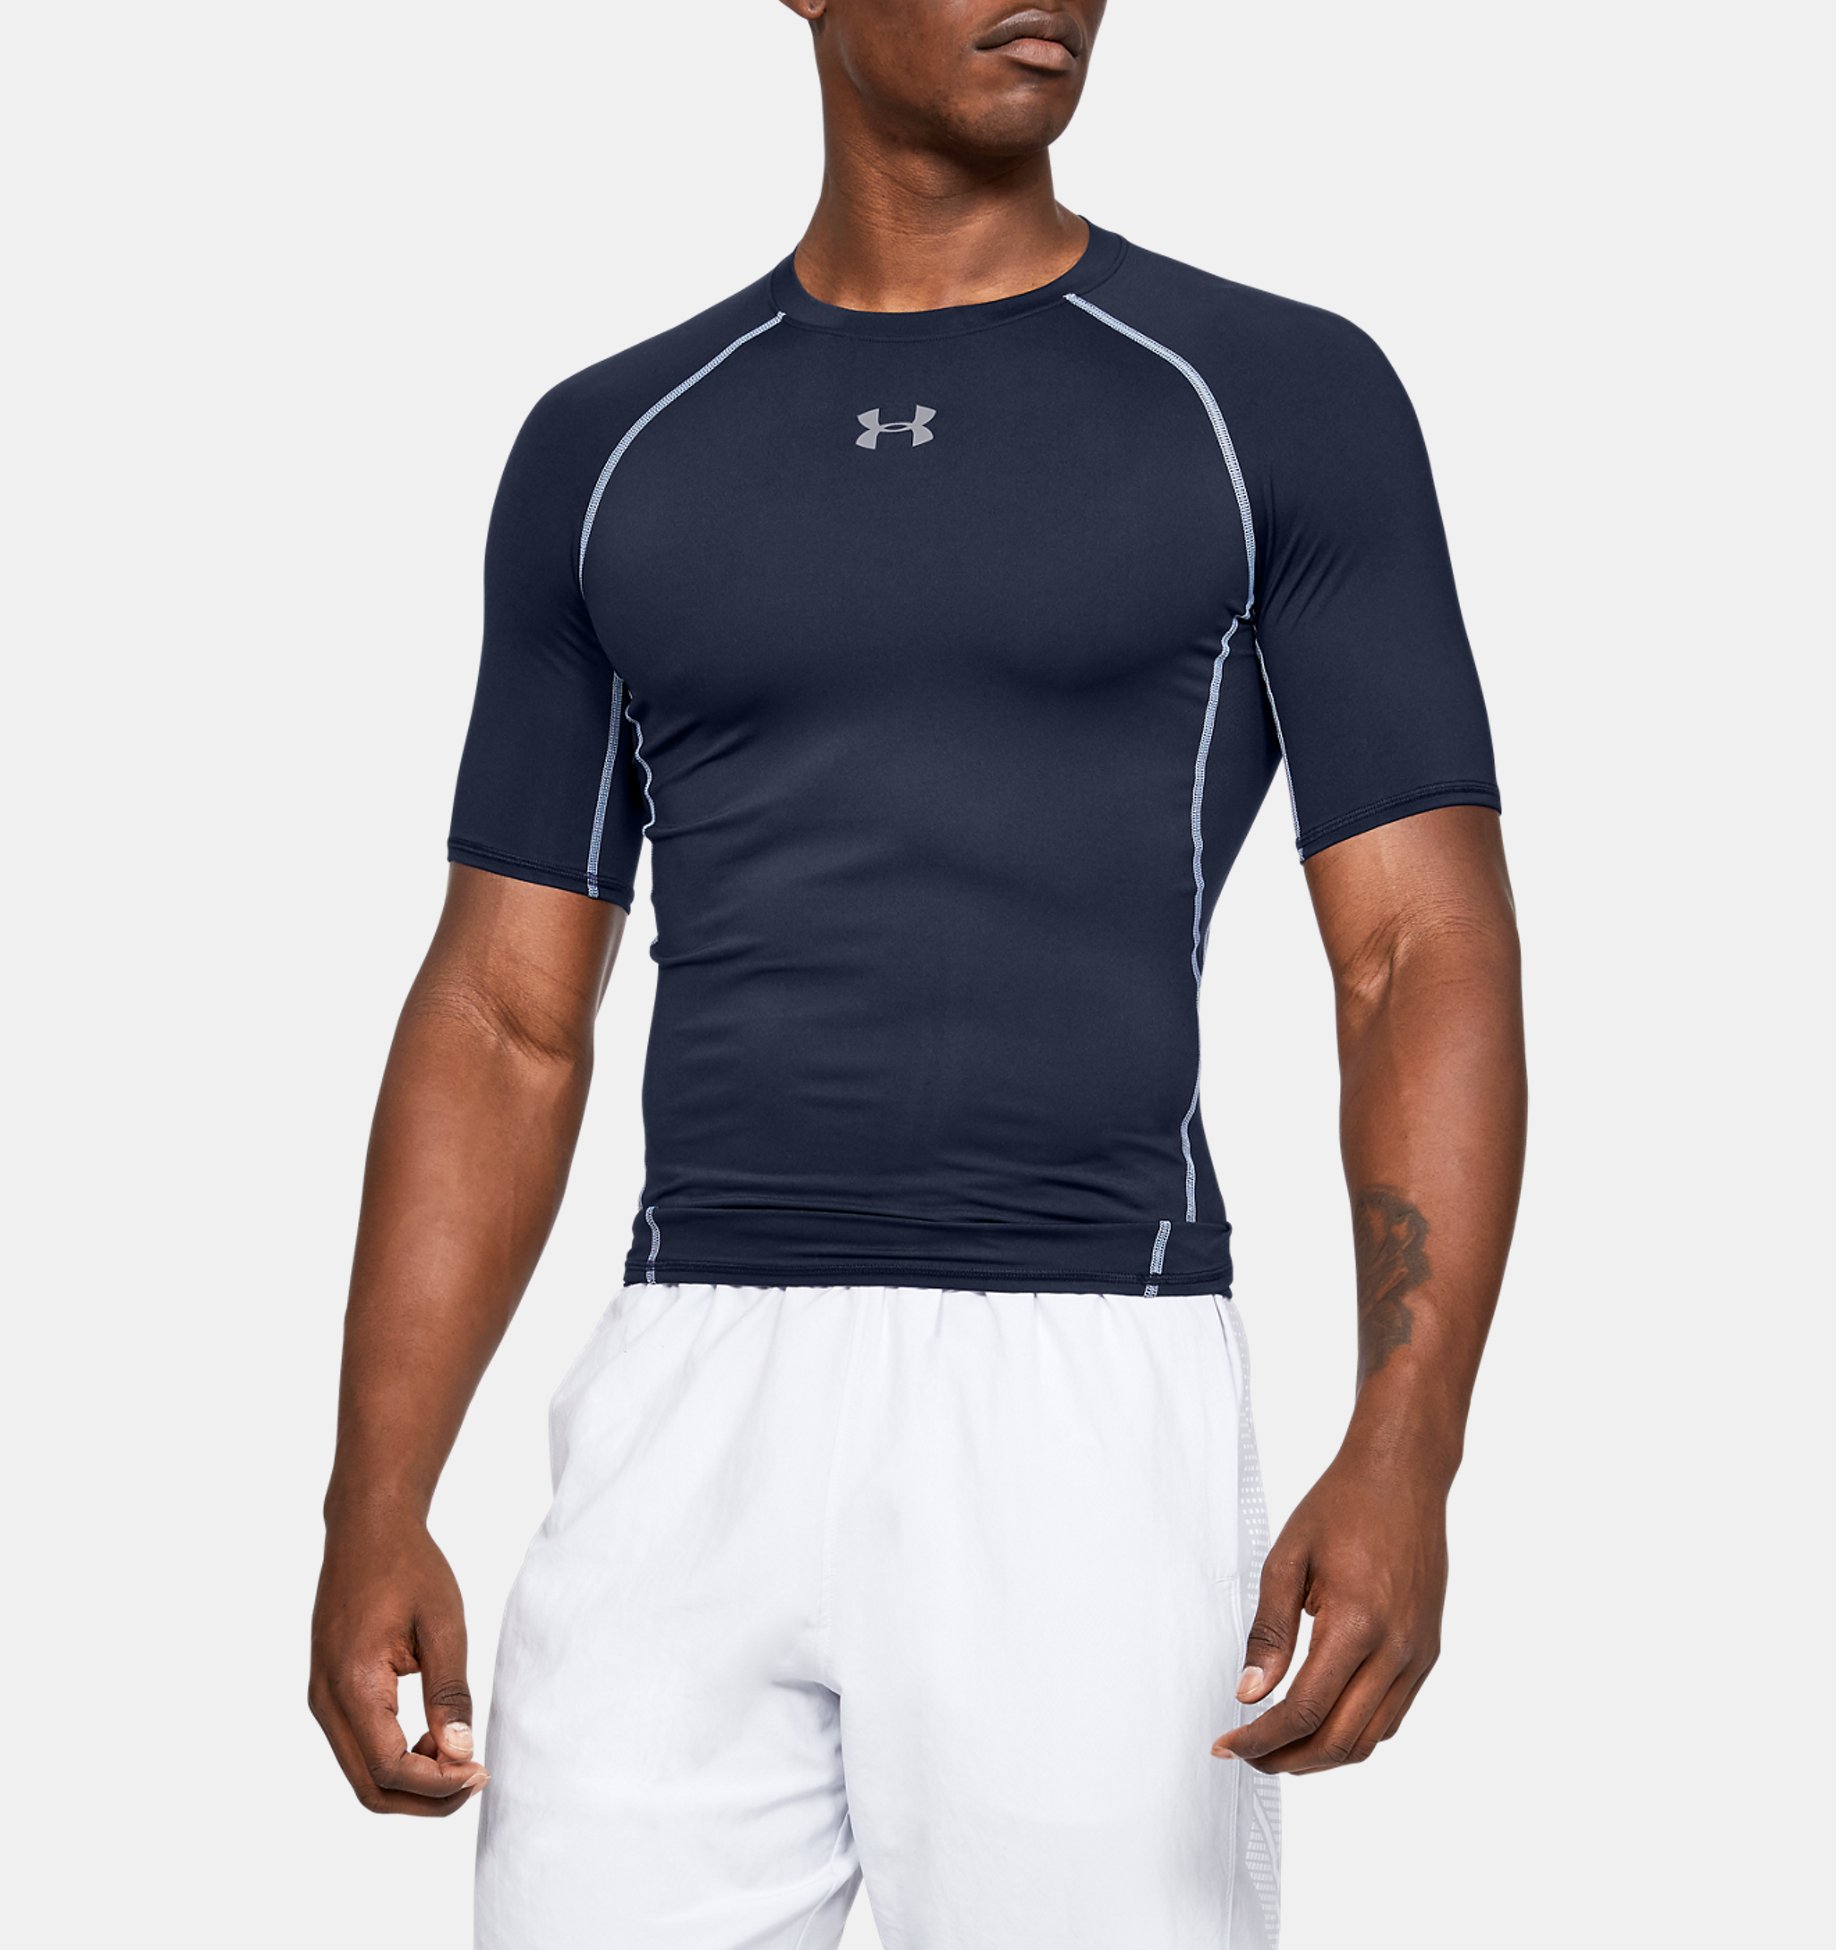 Men's Compression ShirtS Short Sleeve Jersey Fitness Basketball Gym Sport Wear 